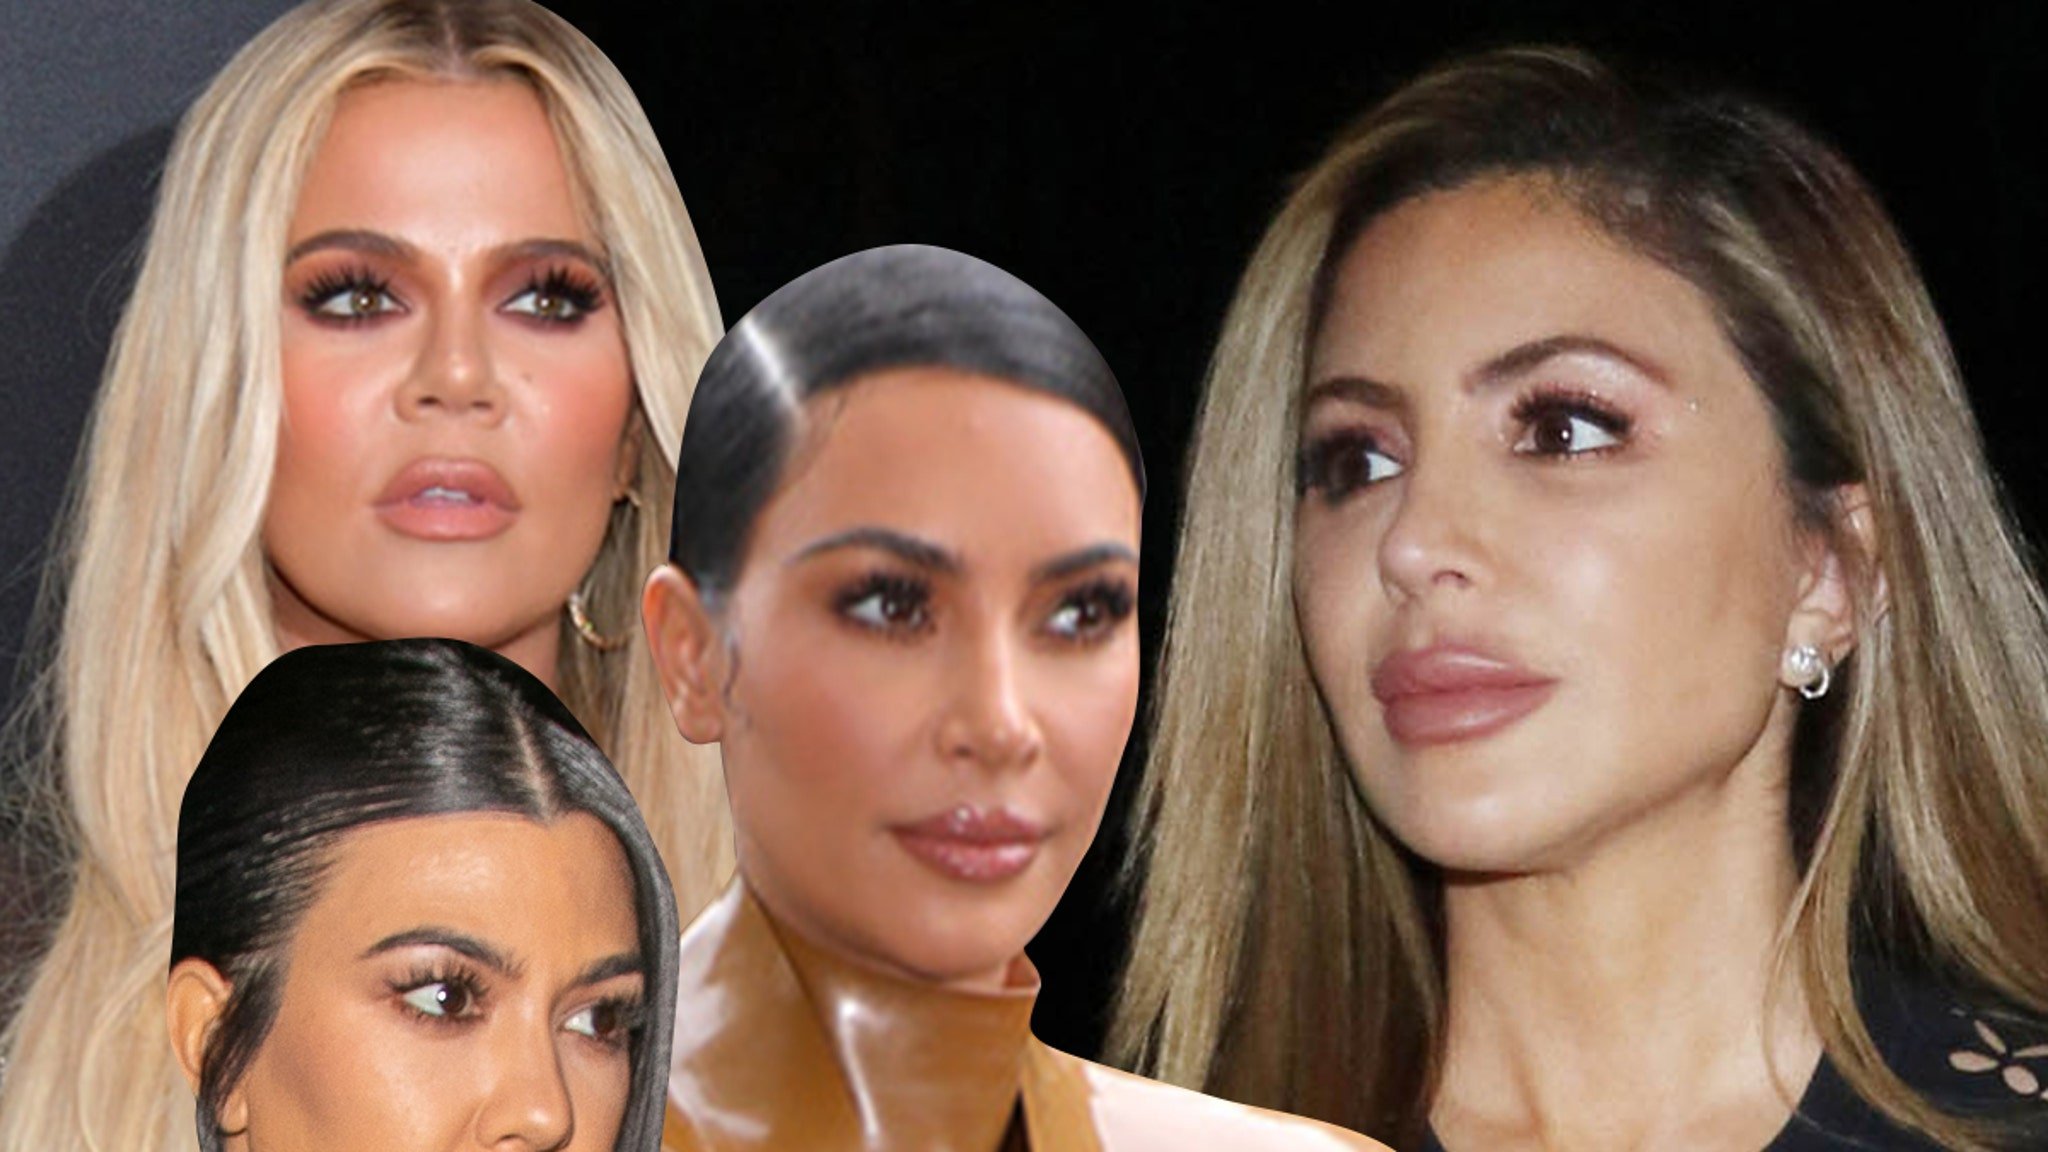 Kim Kardashian Unfollowed Larsa As They Grew Apart ... No Drama or Bad Blood